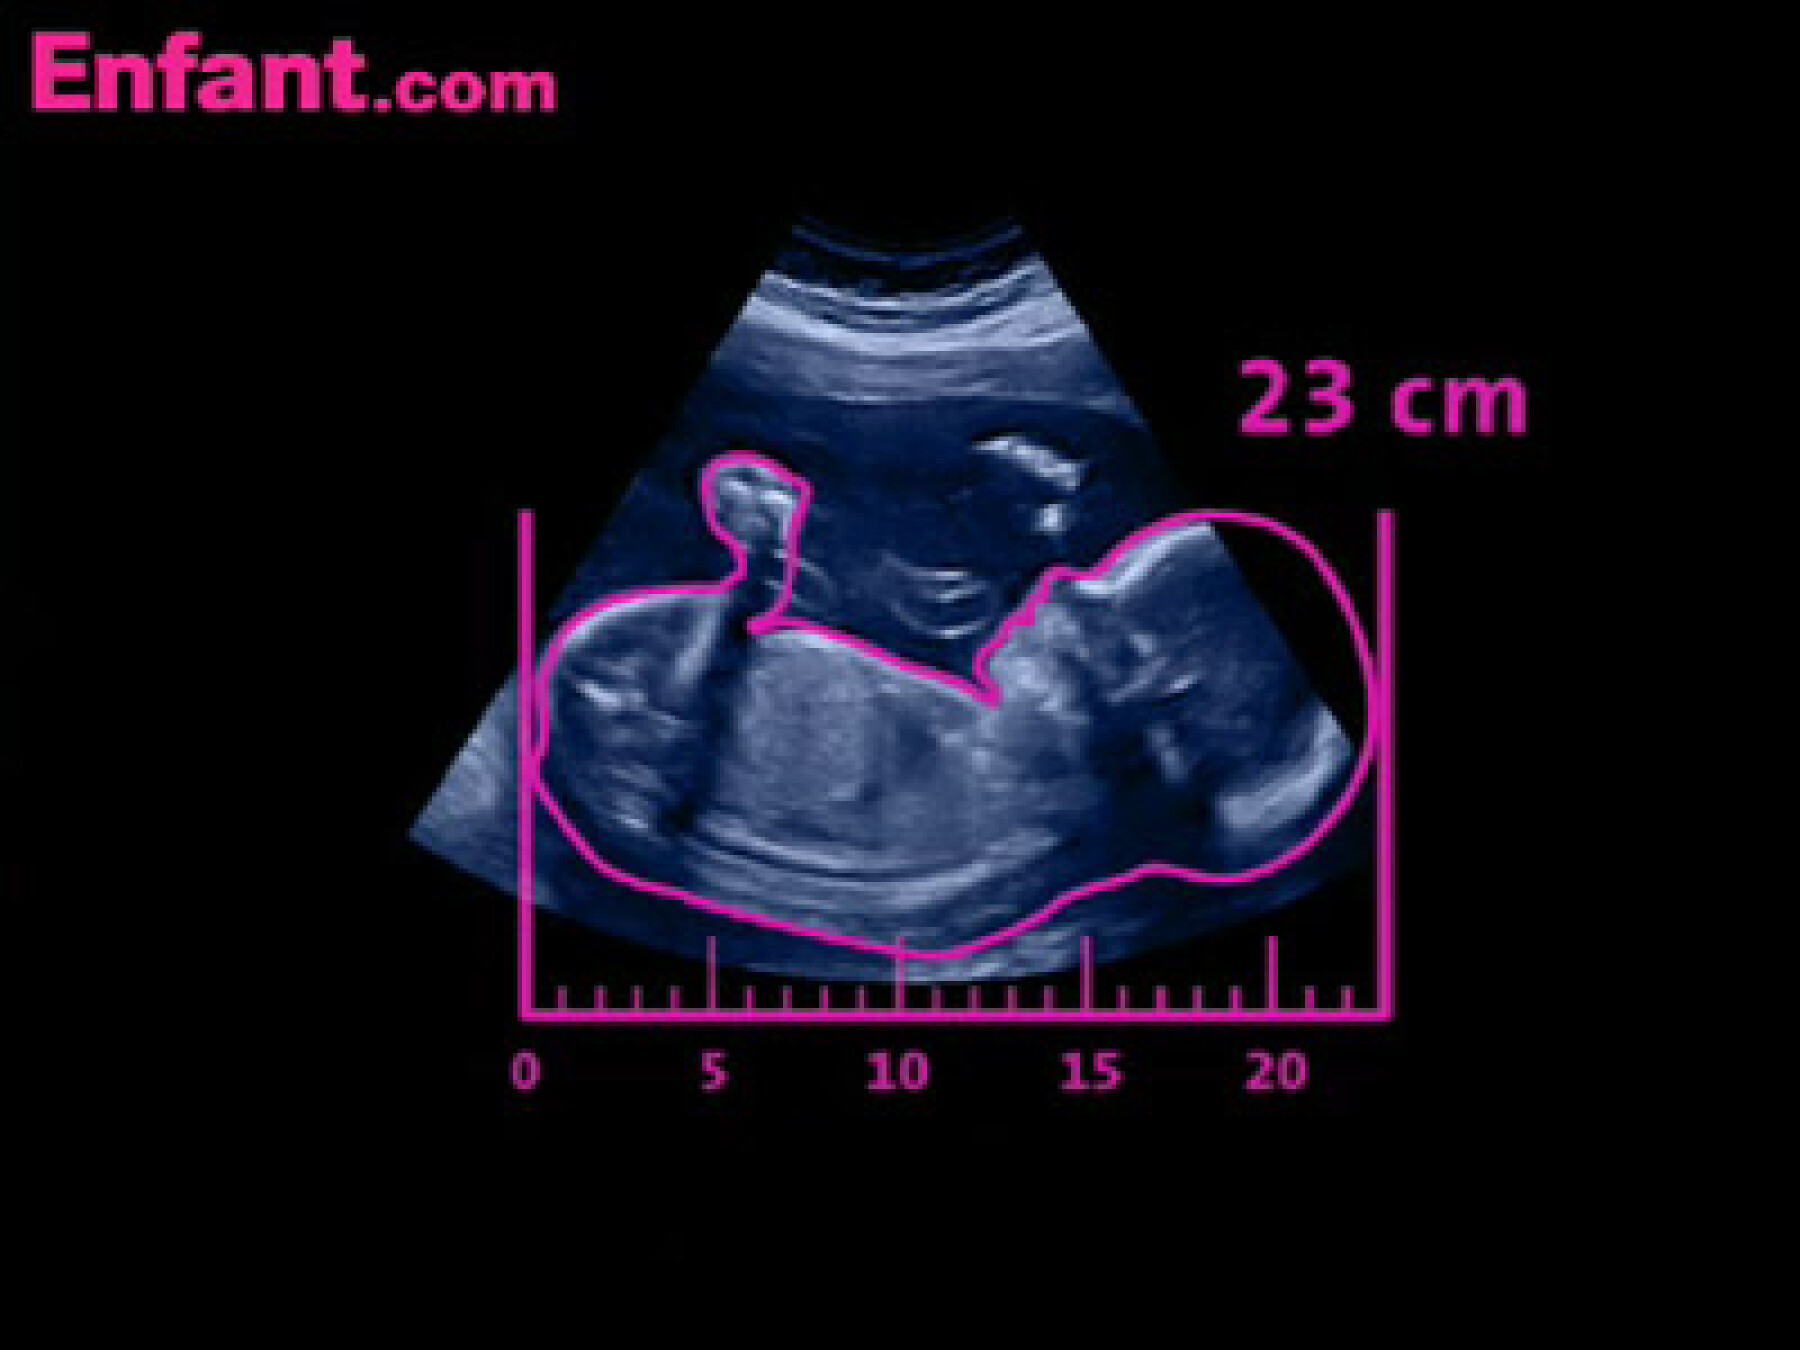 9 mois in utero en vidéos